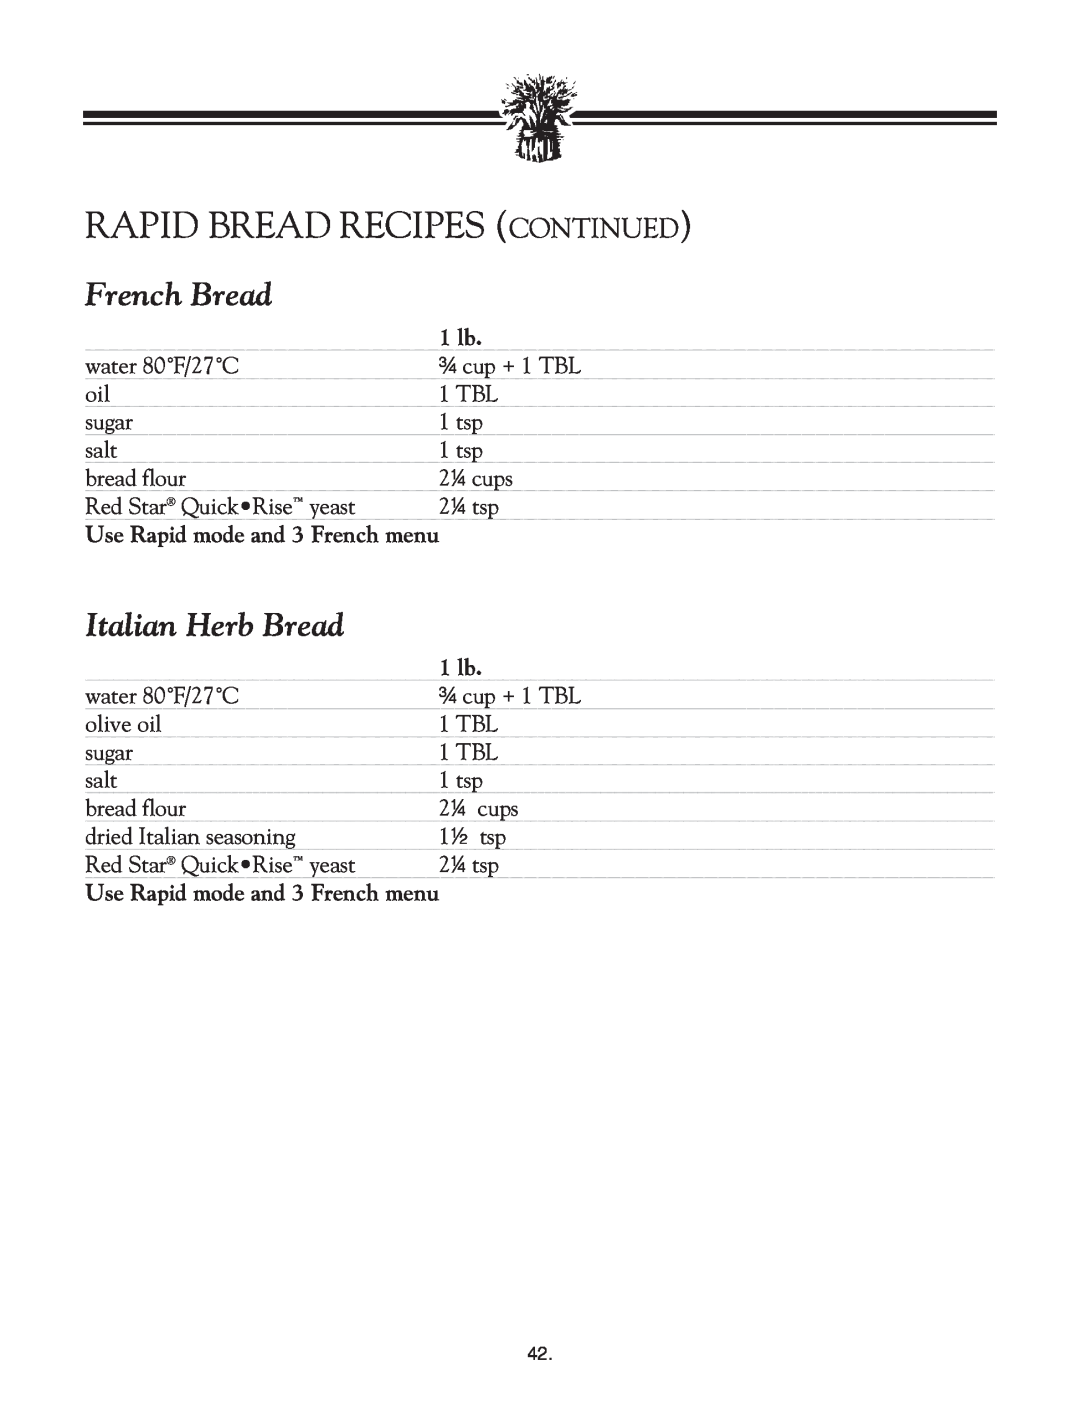 Breadman TR2828G Rapid Bread Recipes Continued, French Bread, Italian Herb Bread, 1 lb, Use Rapid mode and 3 French menu 